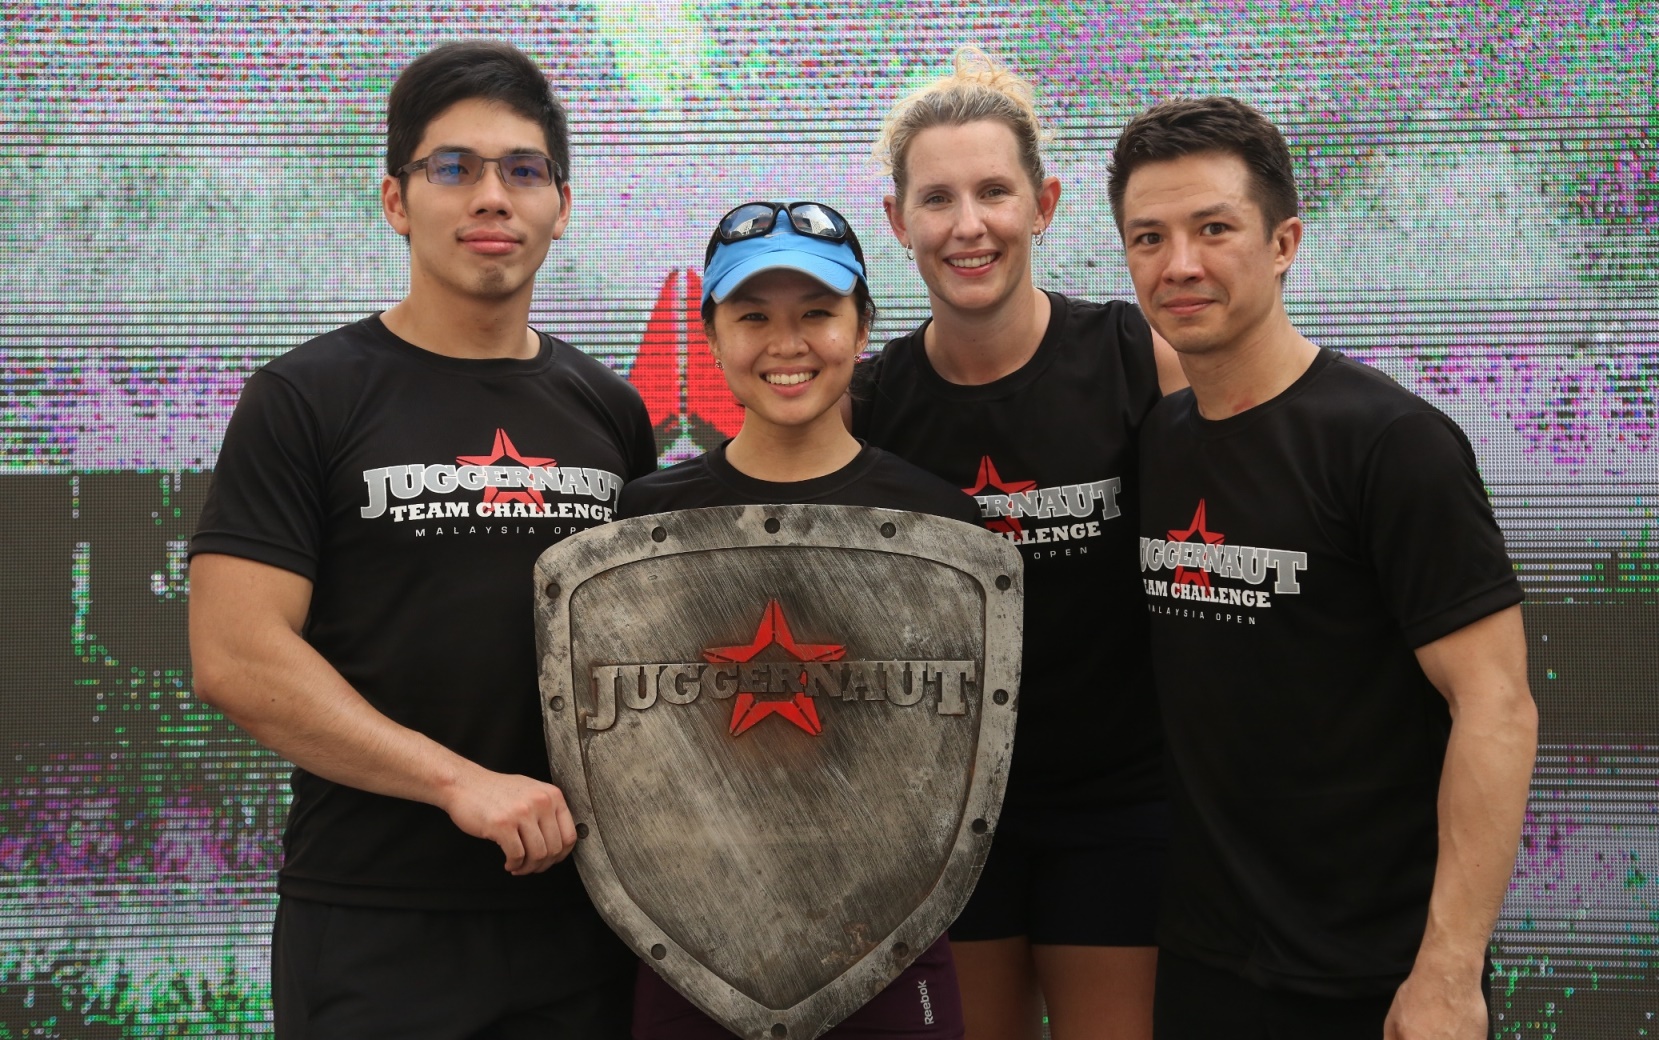 Team PAK JUMP KAI rose as the winners for the Team Challenge, claiming the Juggernaut Team Shield.